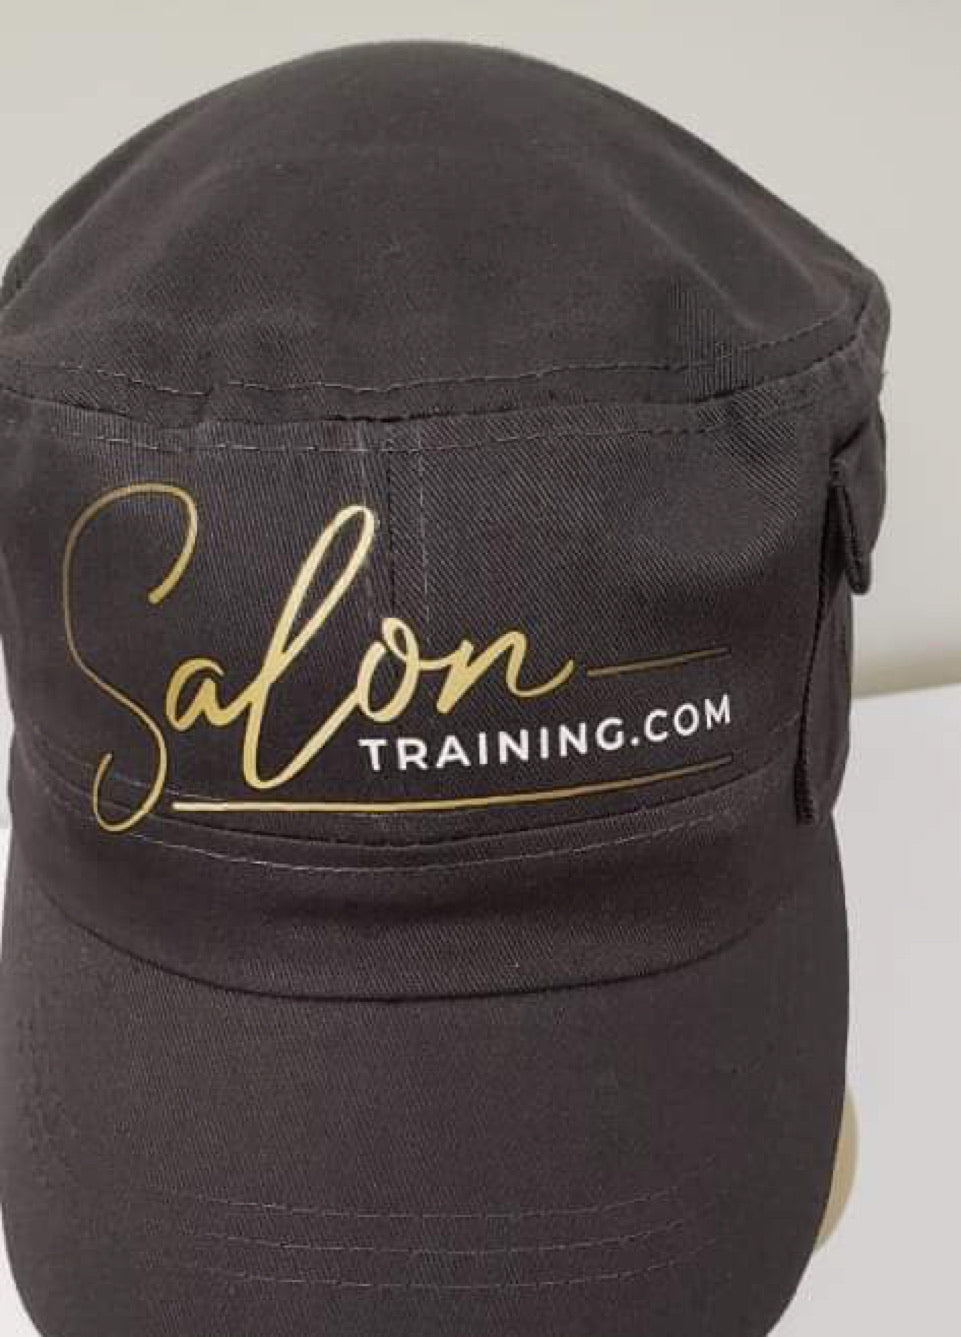 Salon Training Hats